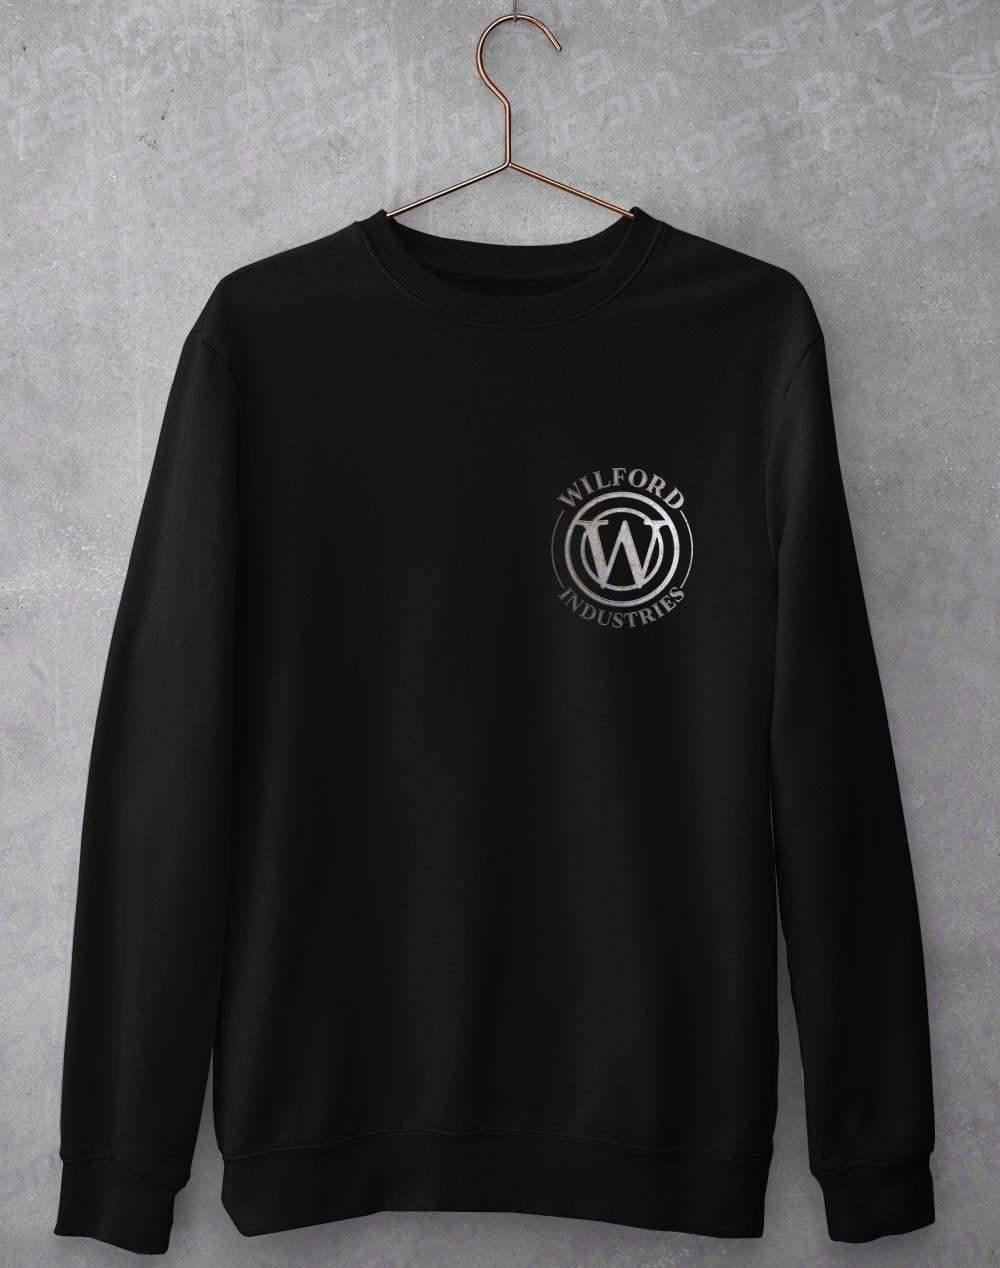 Wilford Industries Pocket Print Sweatshirt S / Black  - Off World Tees